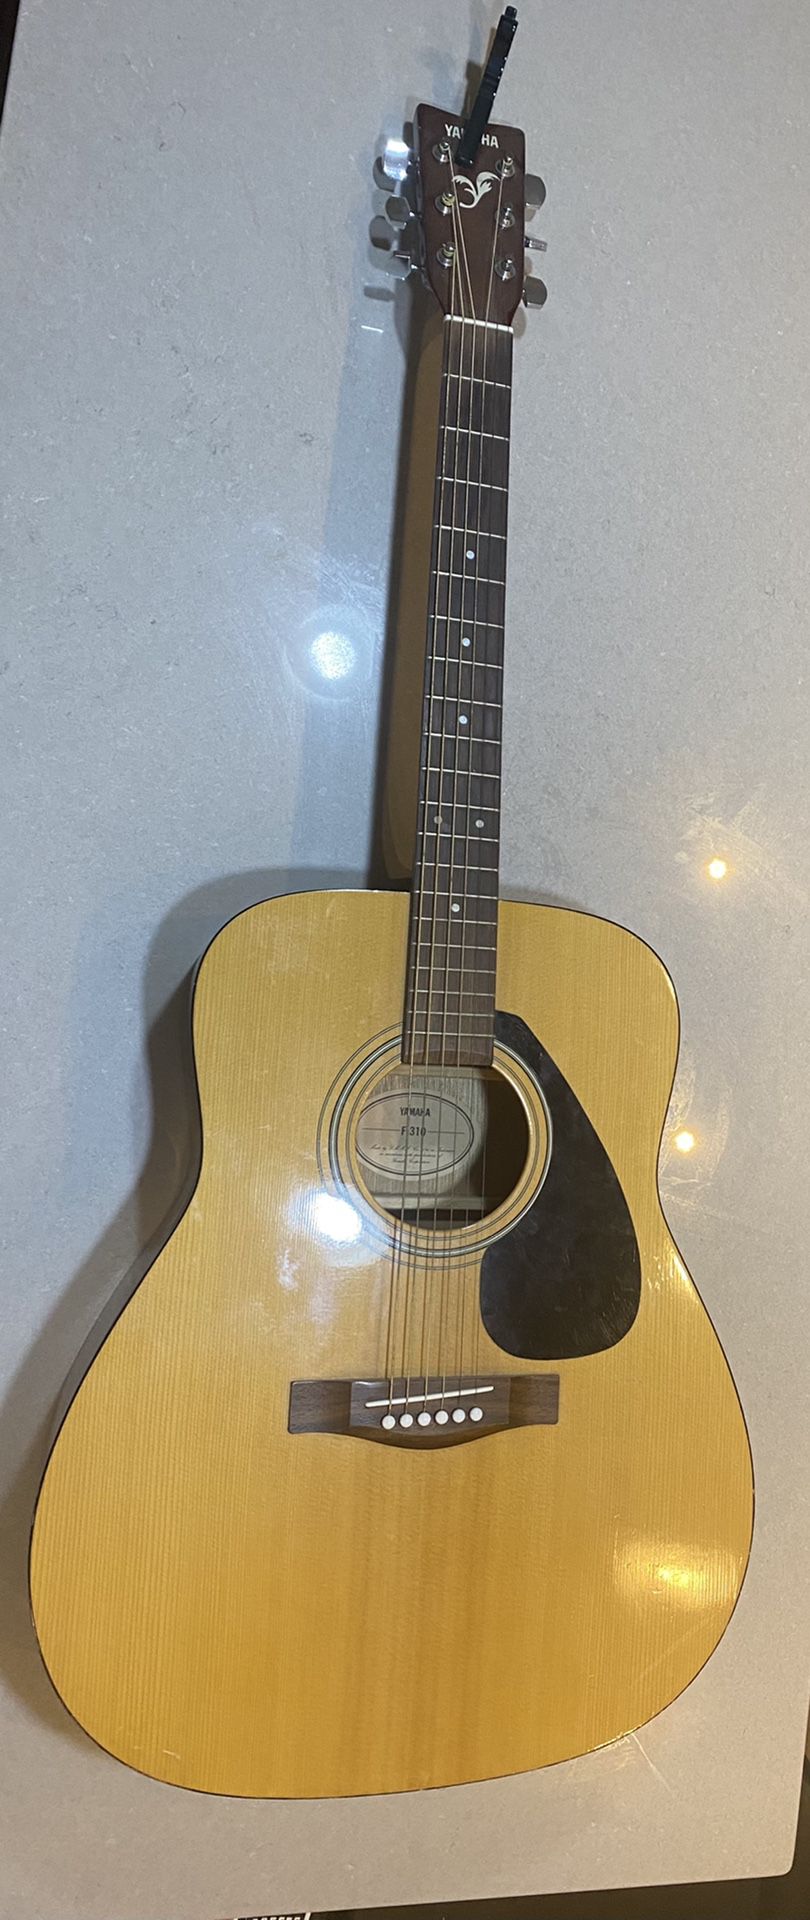 Used F310 Yamaha Acoustic Guitar plus black metal Trigger Acoustic Capo